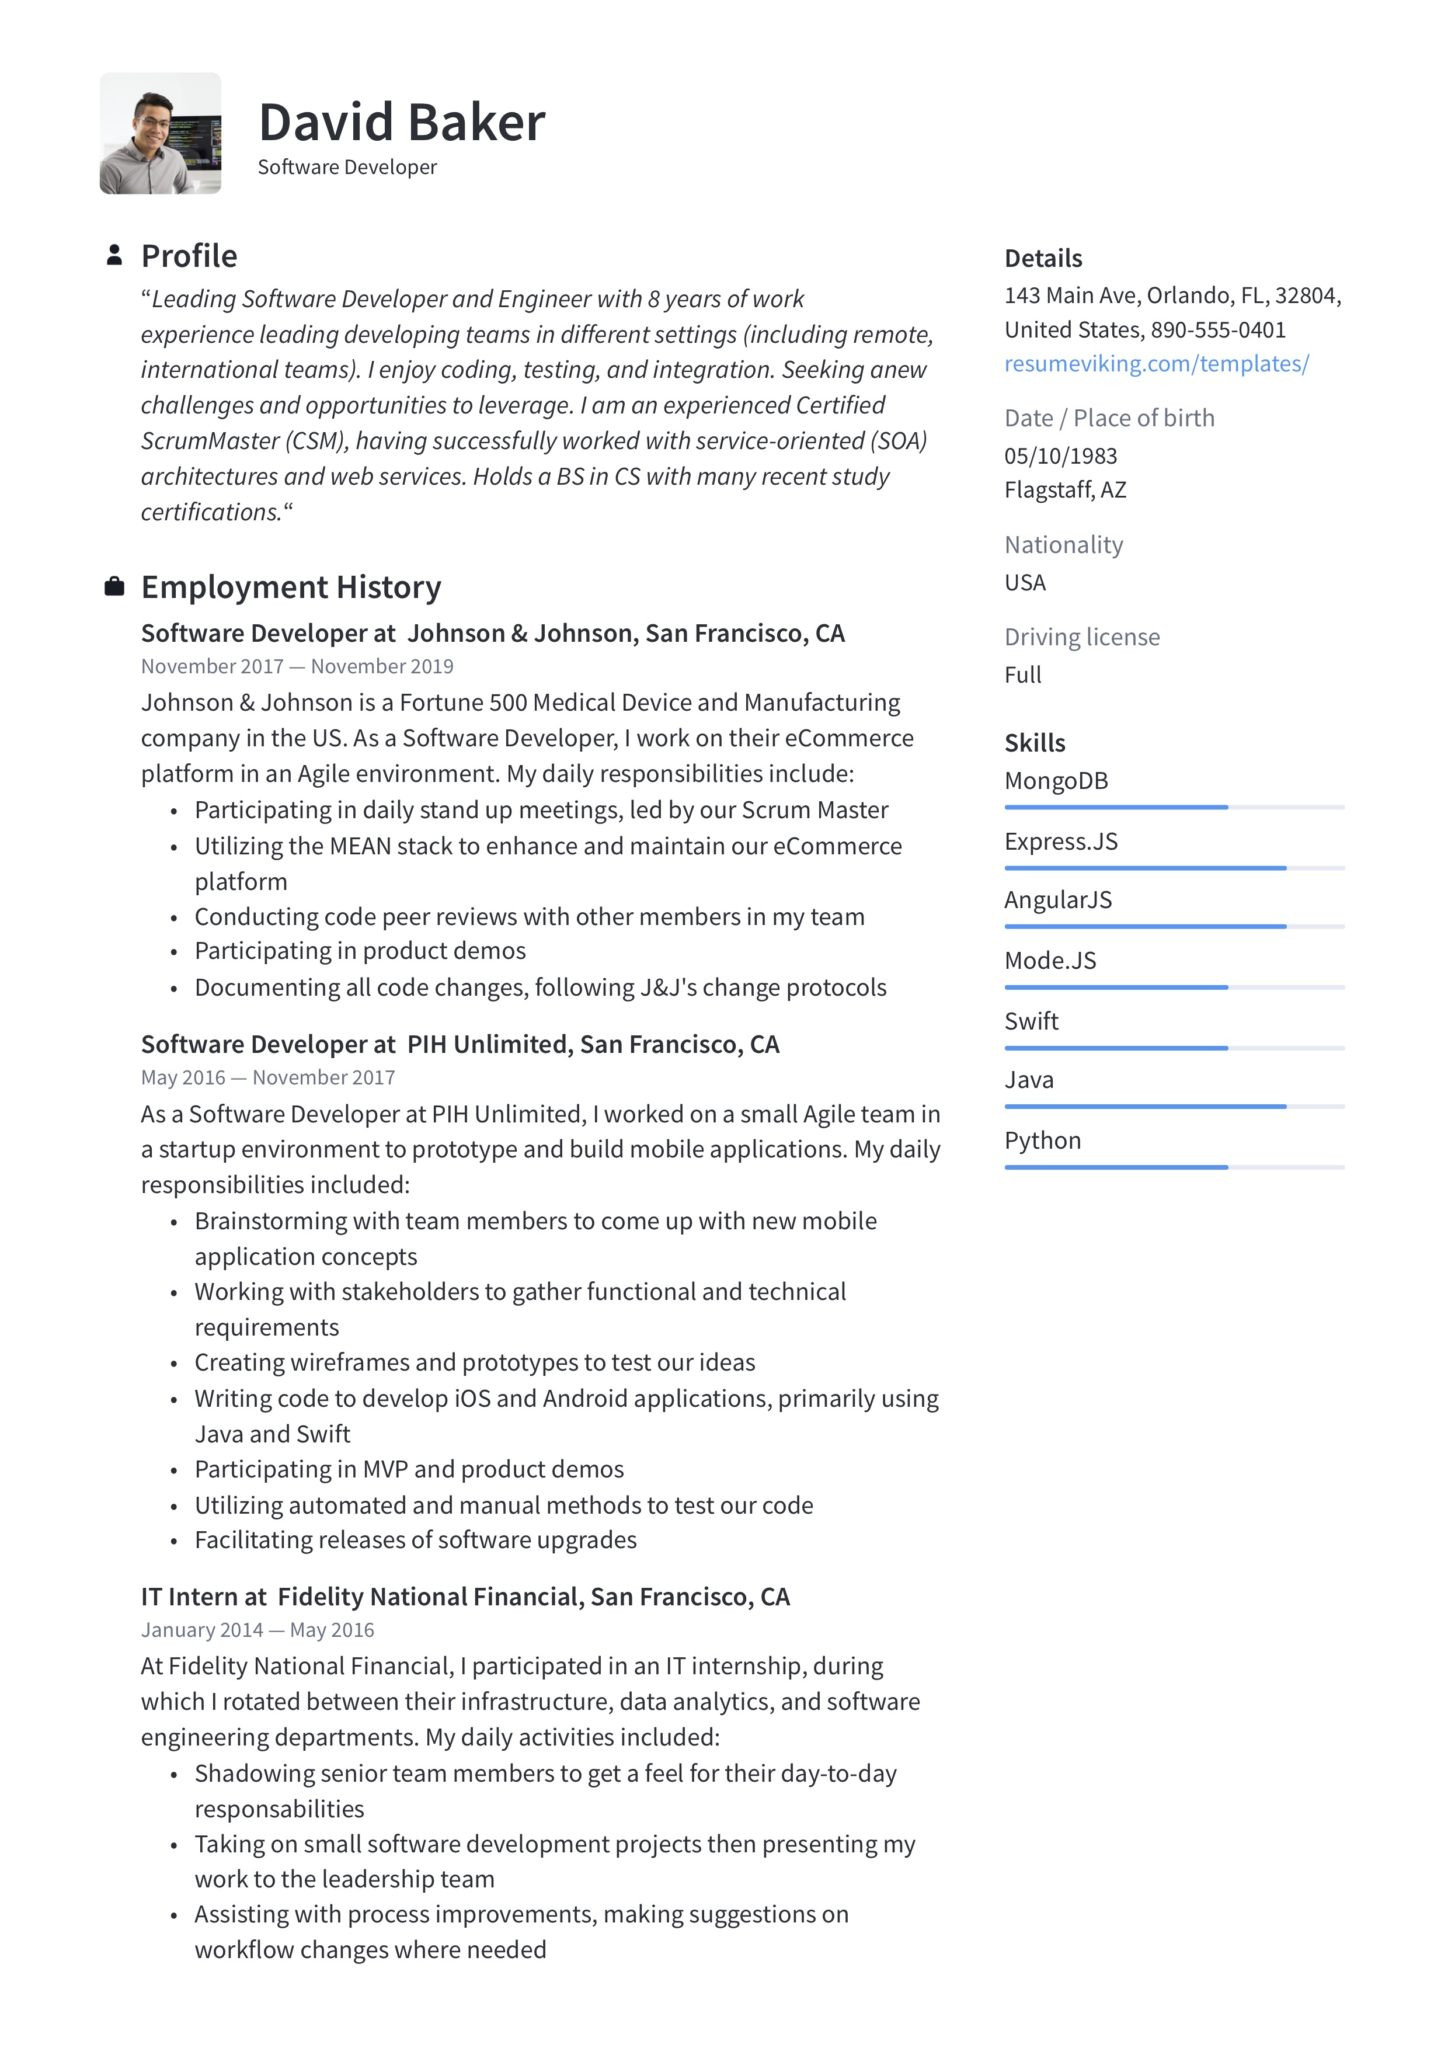 Sample Resume for Computer Science Fresh Graduate Pdf Guide: software Developer Resume  19 Examples Word & Pdf 2020